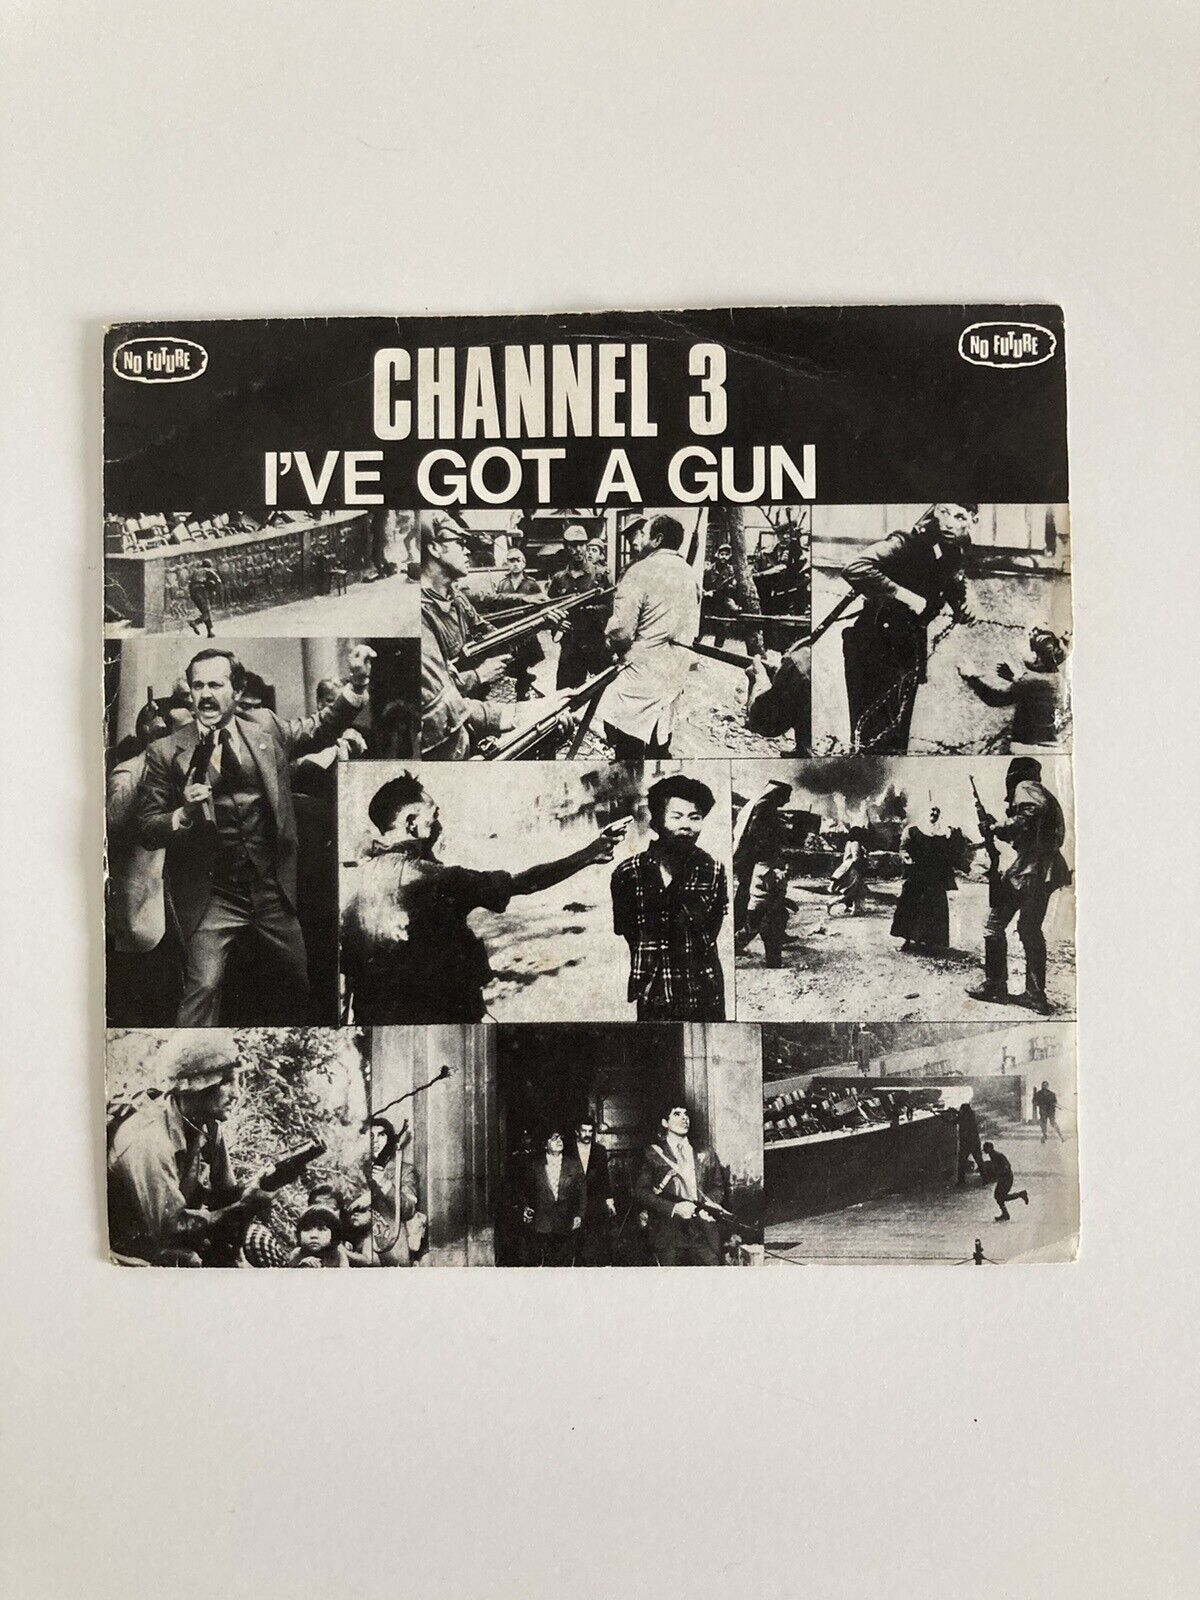 Channel 3 I've Got A Gun 7" EP No Future Records 1982 Oi 11 Punk Oi! Skinhead